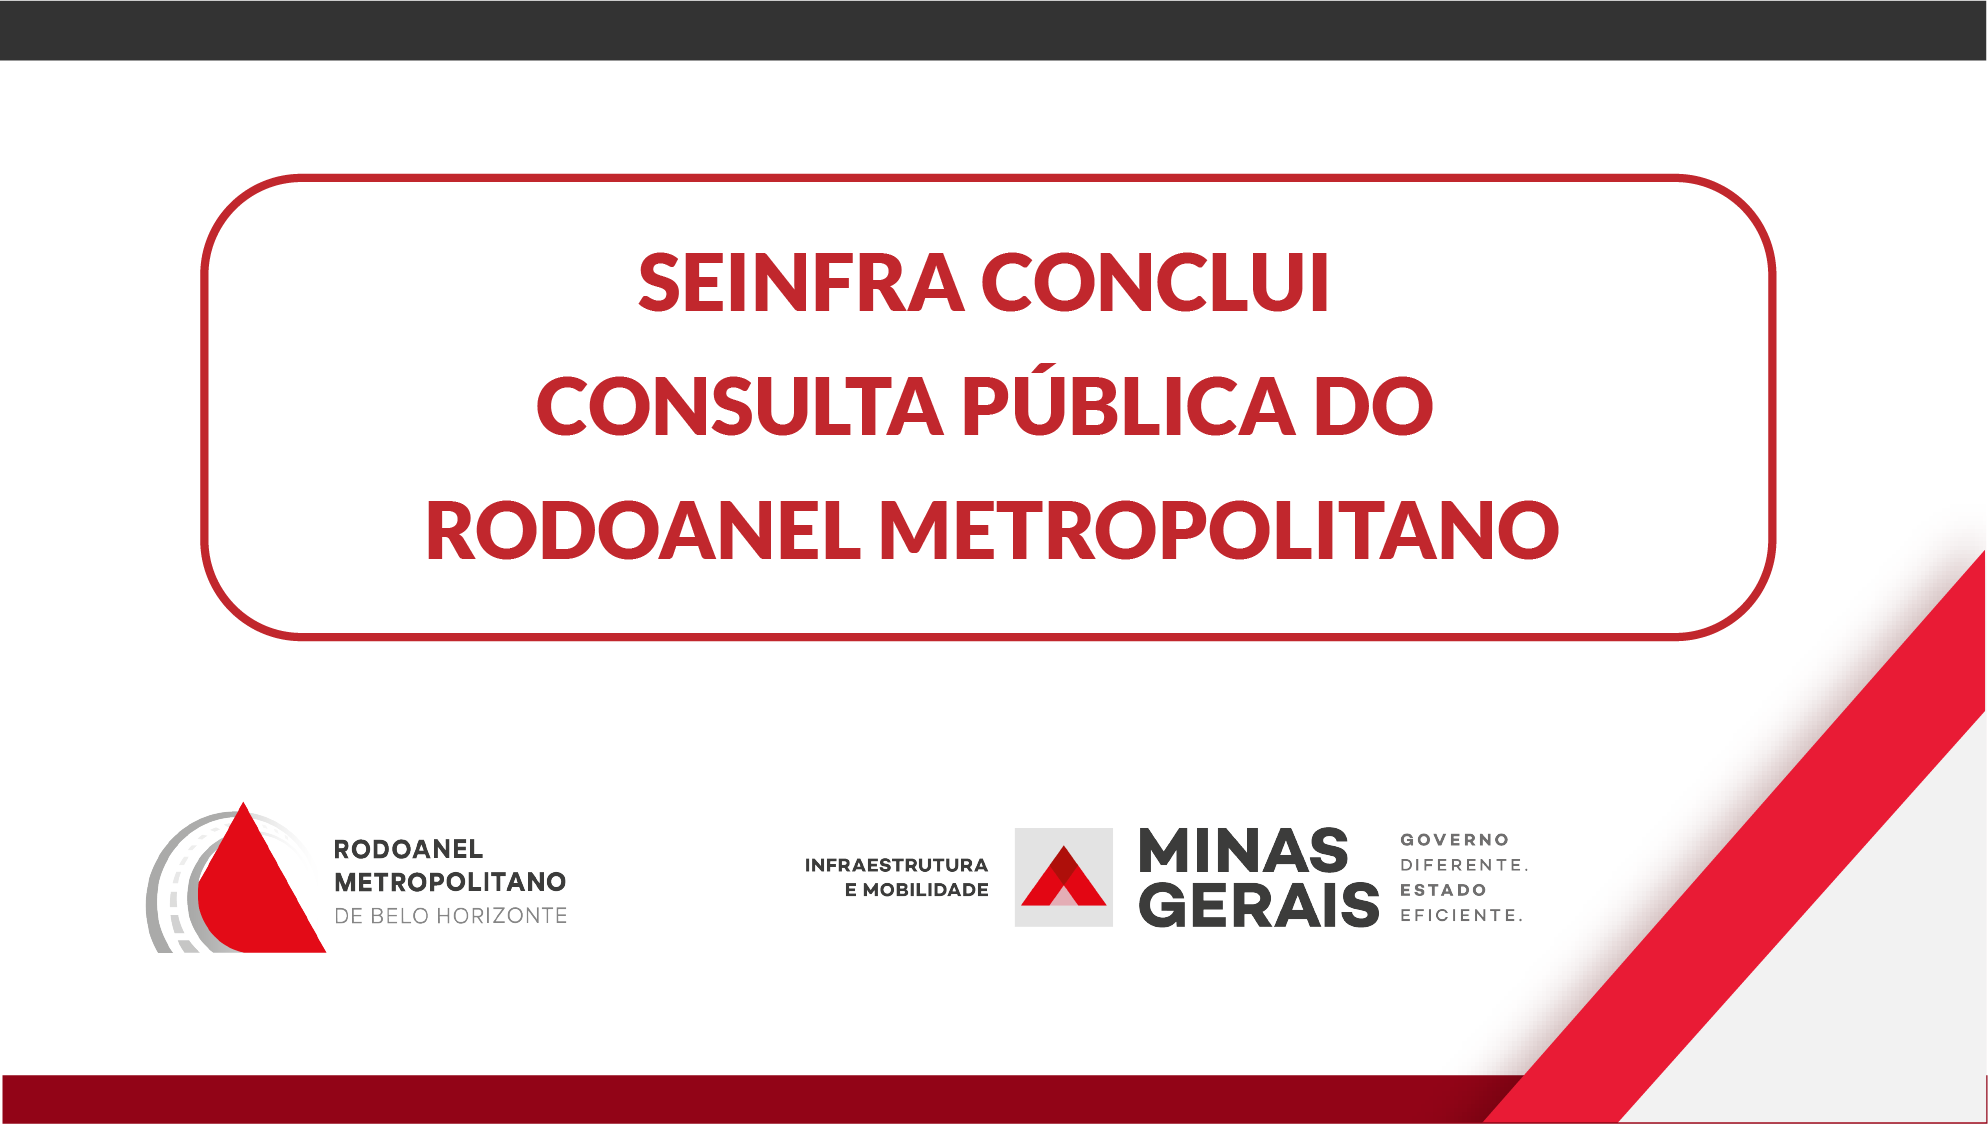 Seinfra conclui Consulta Pública do Rodoanel Metropolitano